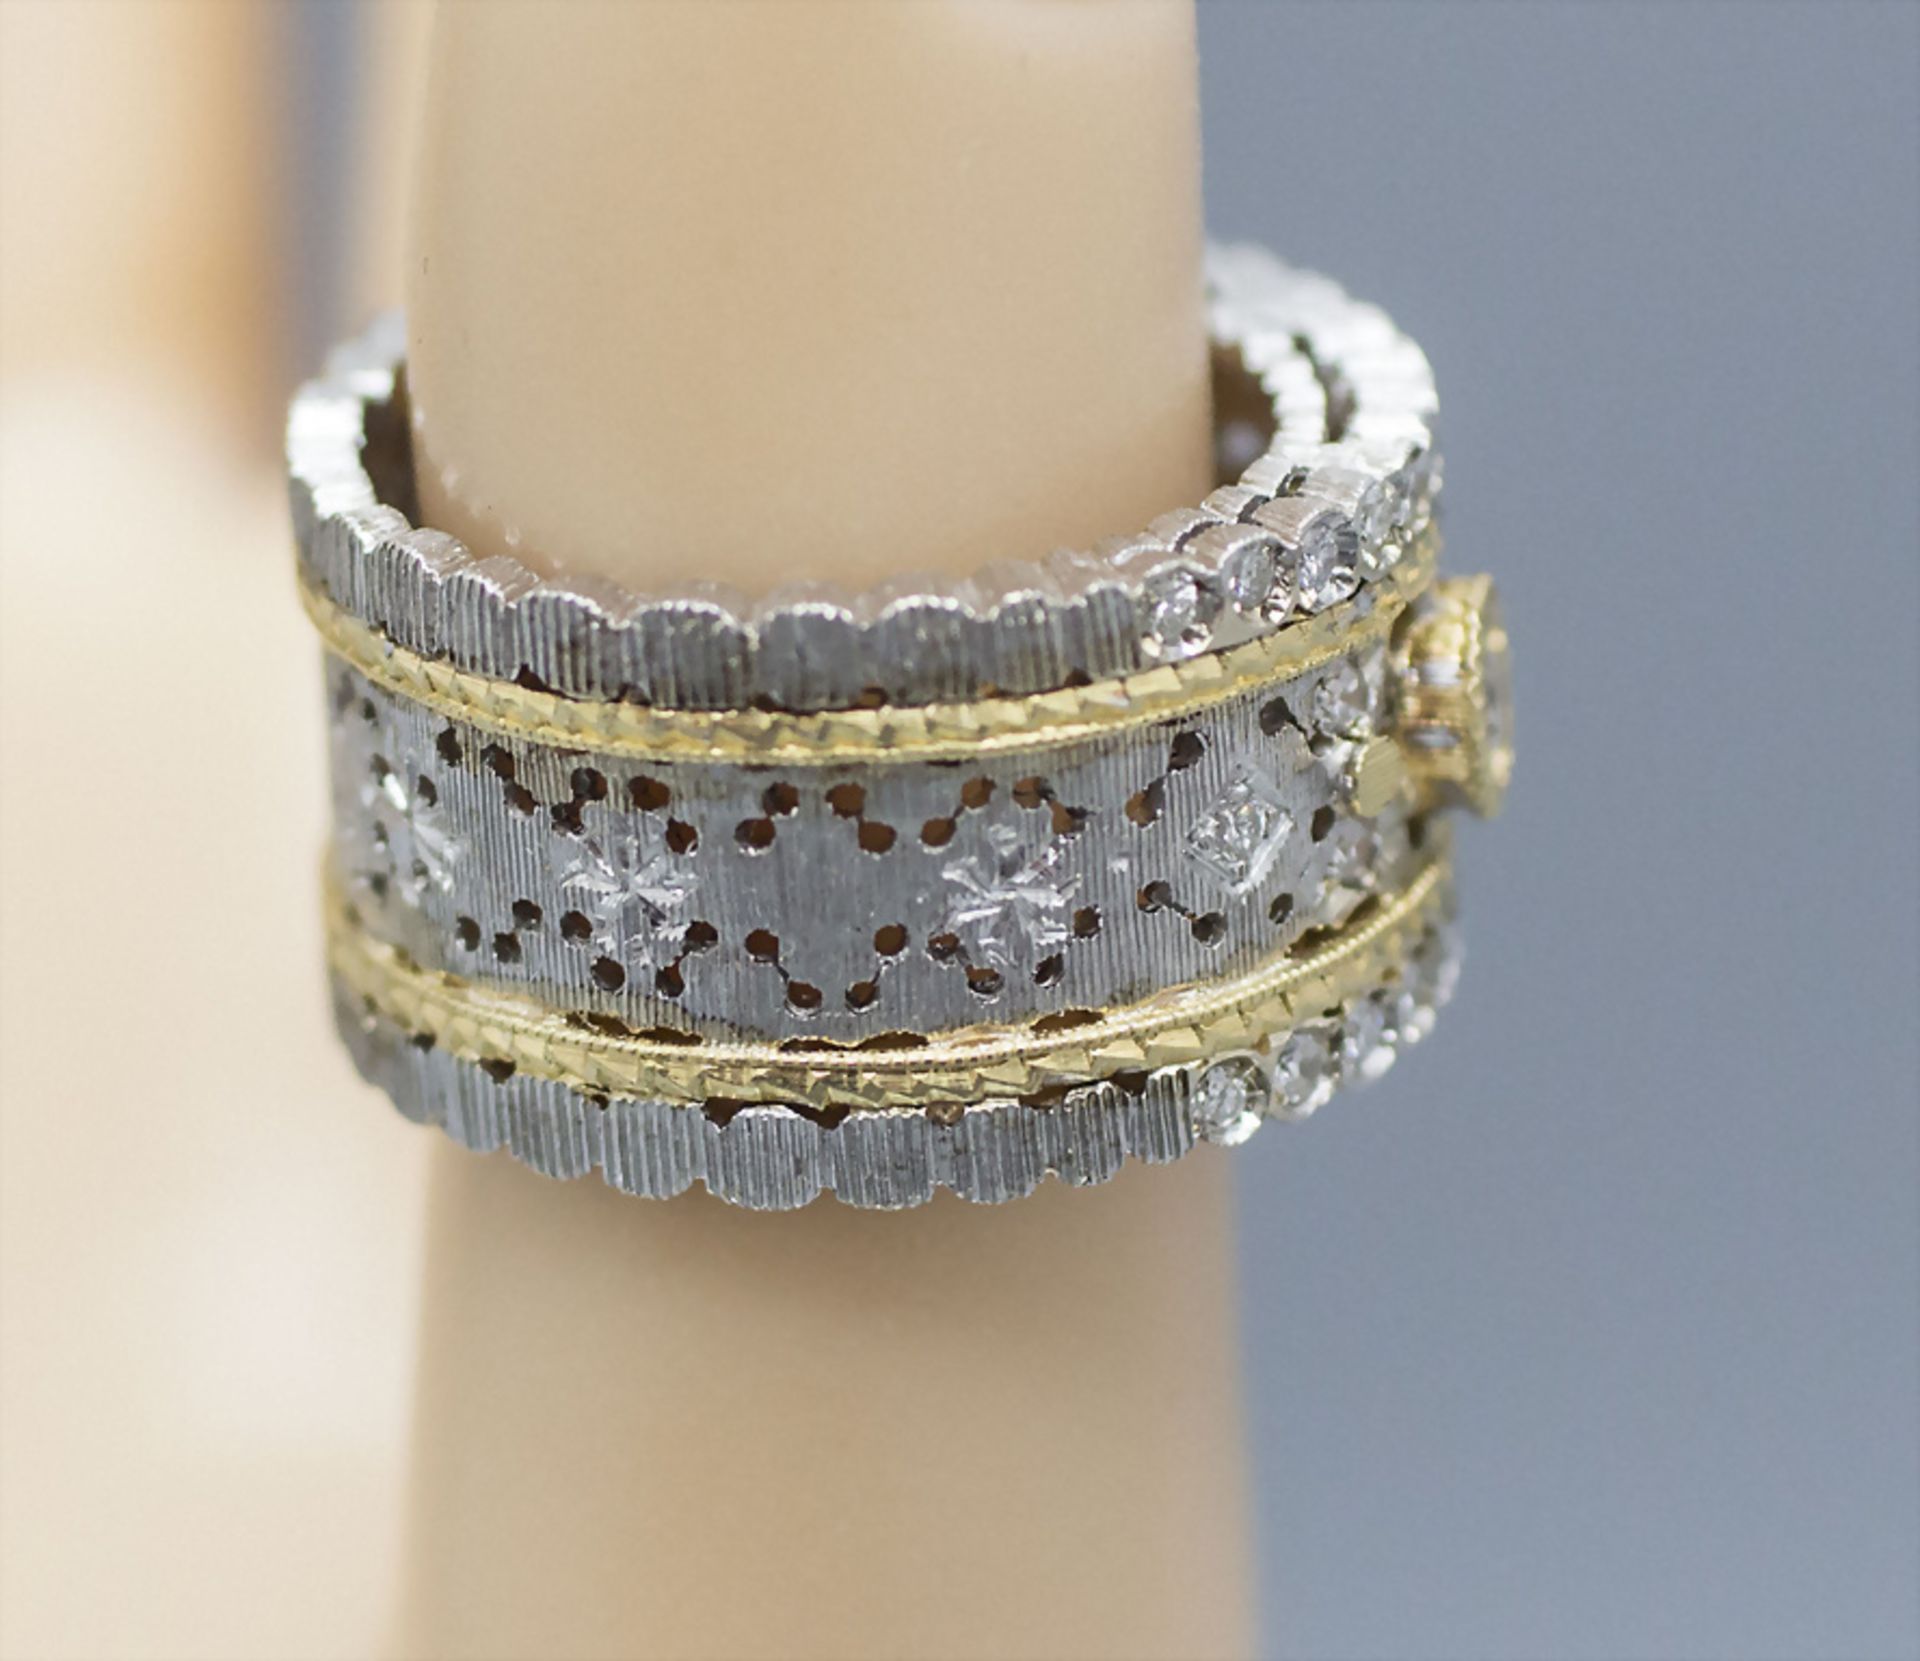 Damenring mit Brillanten / An 18 ct ladies gold ring with diamonds - Bild 3 aus 3